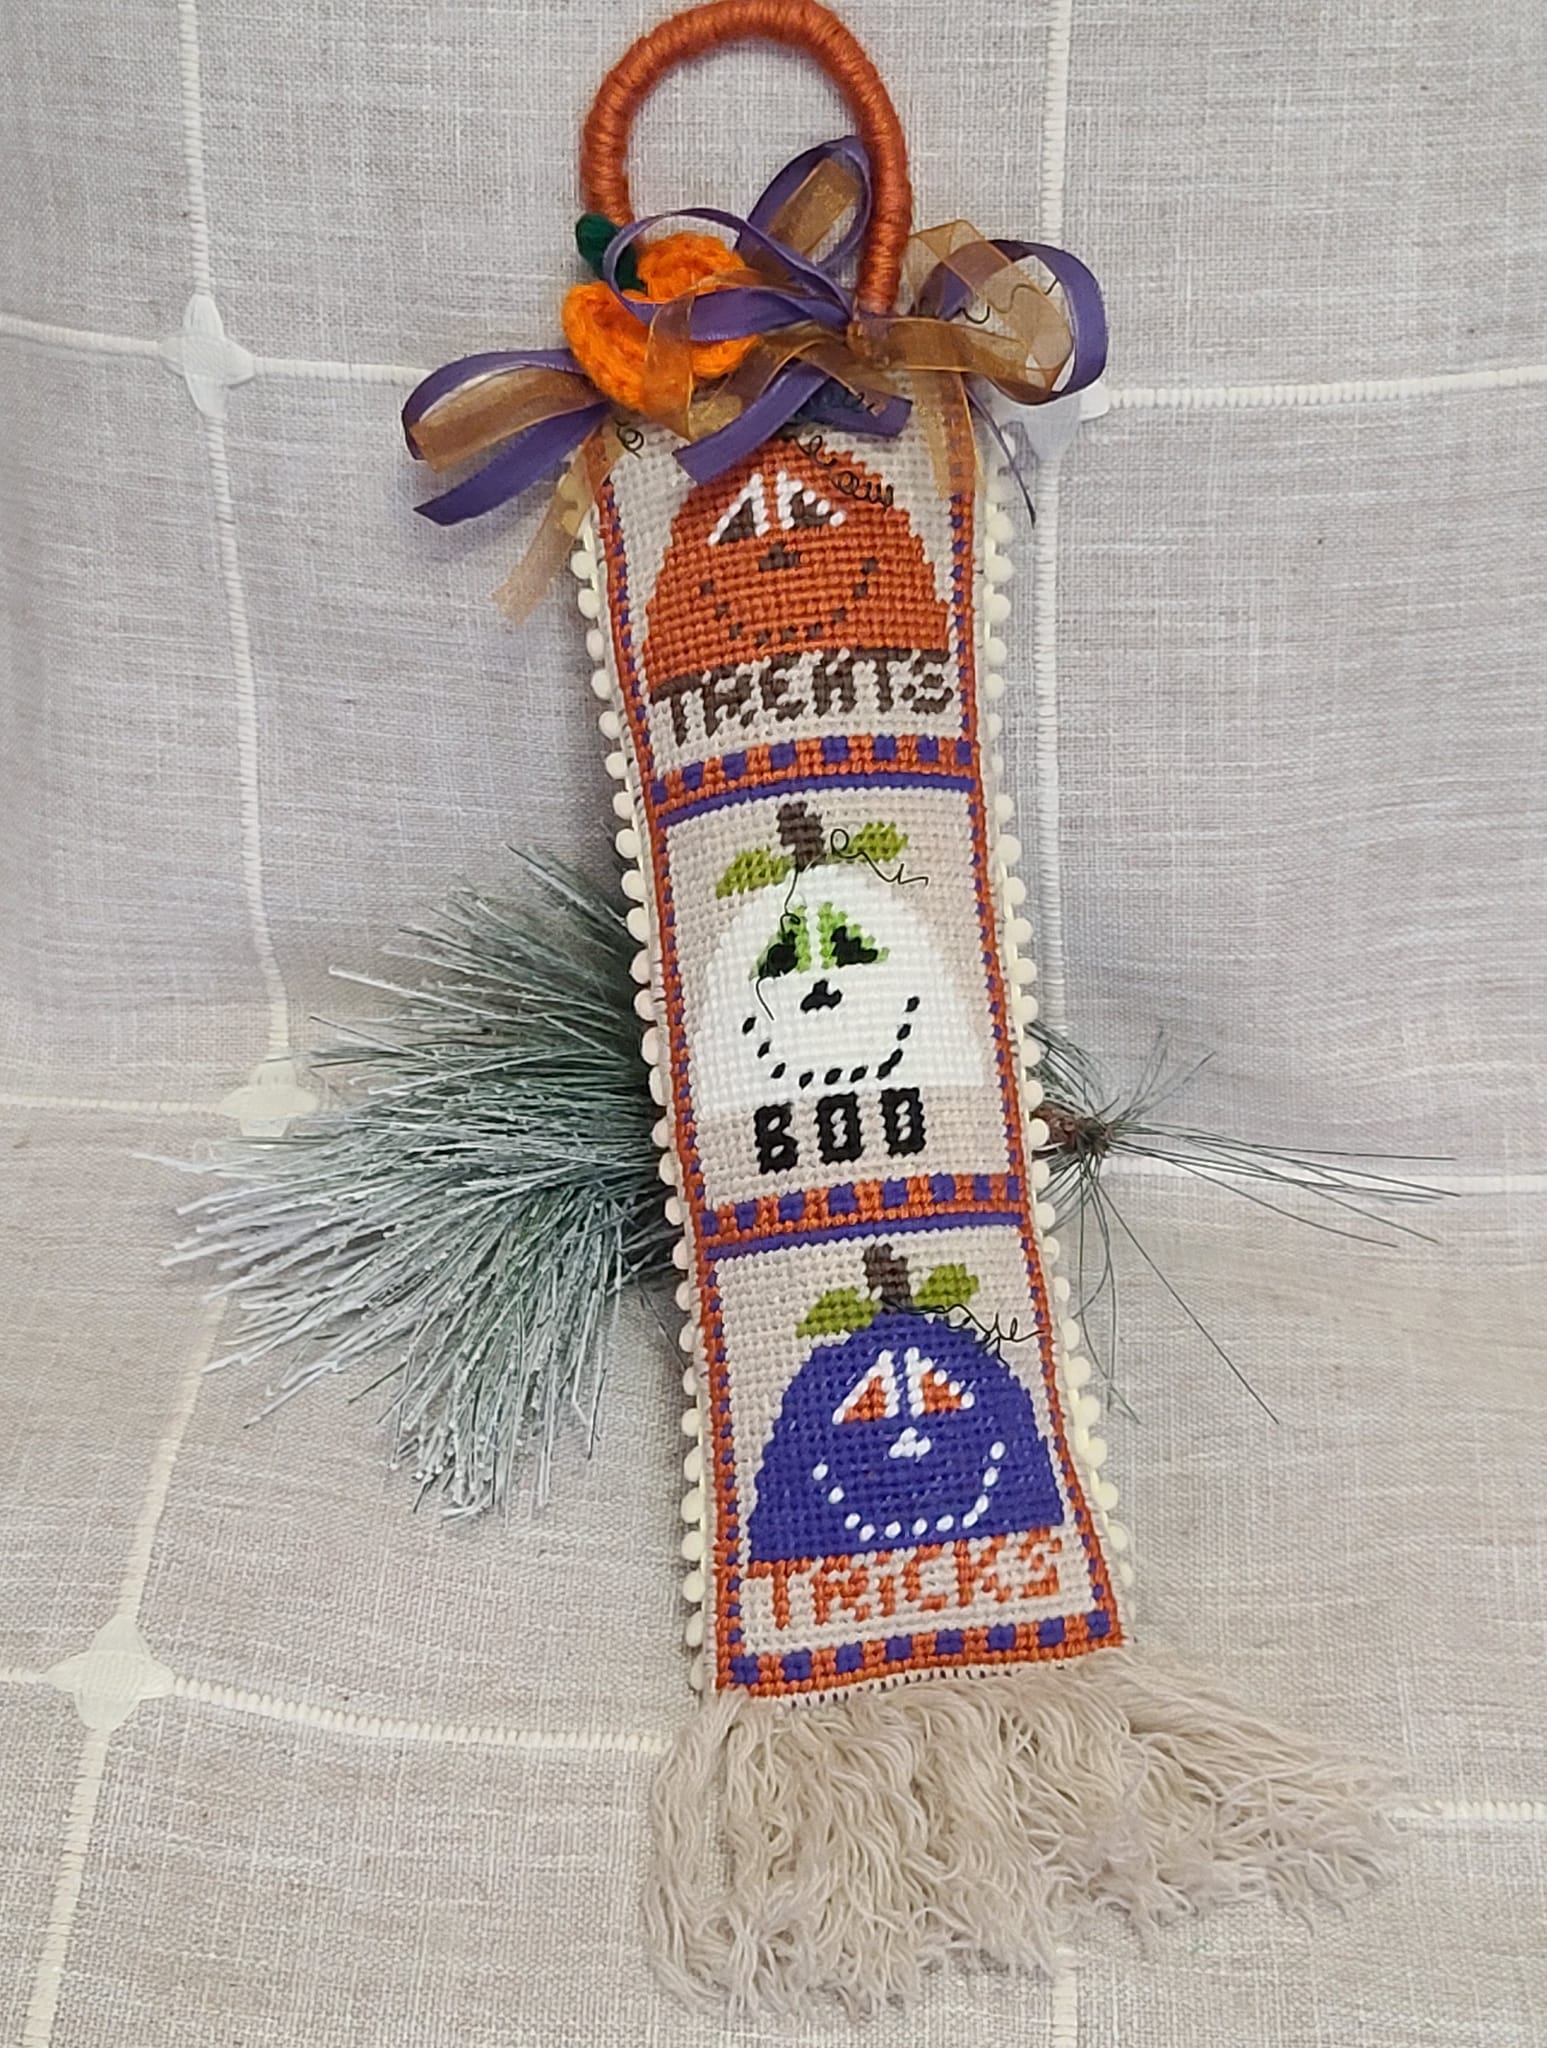 Needlework Treats, Boo and Tricks Fall Ornamental Hanger - Click Image to Close